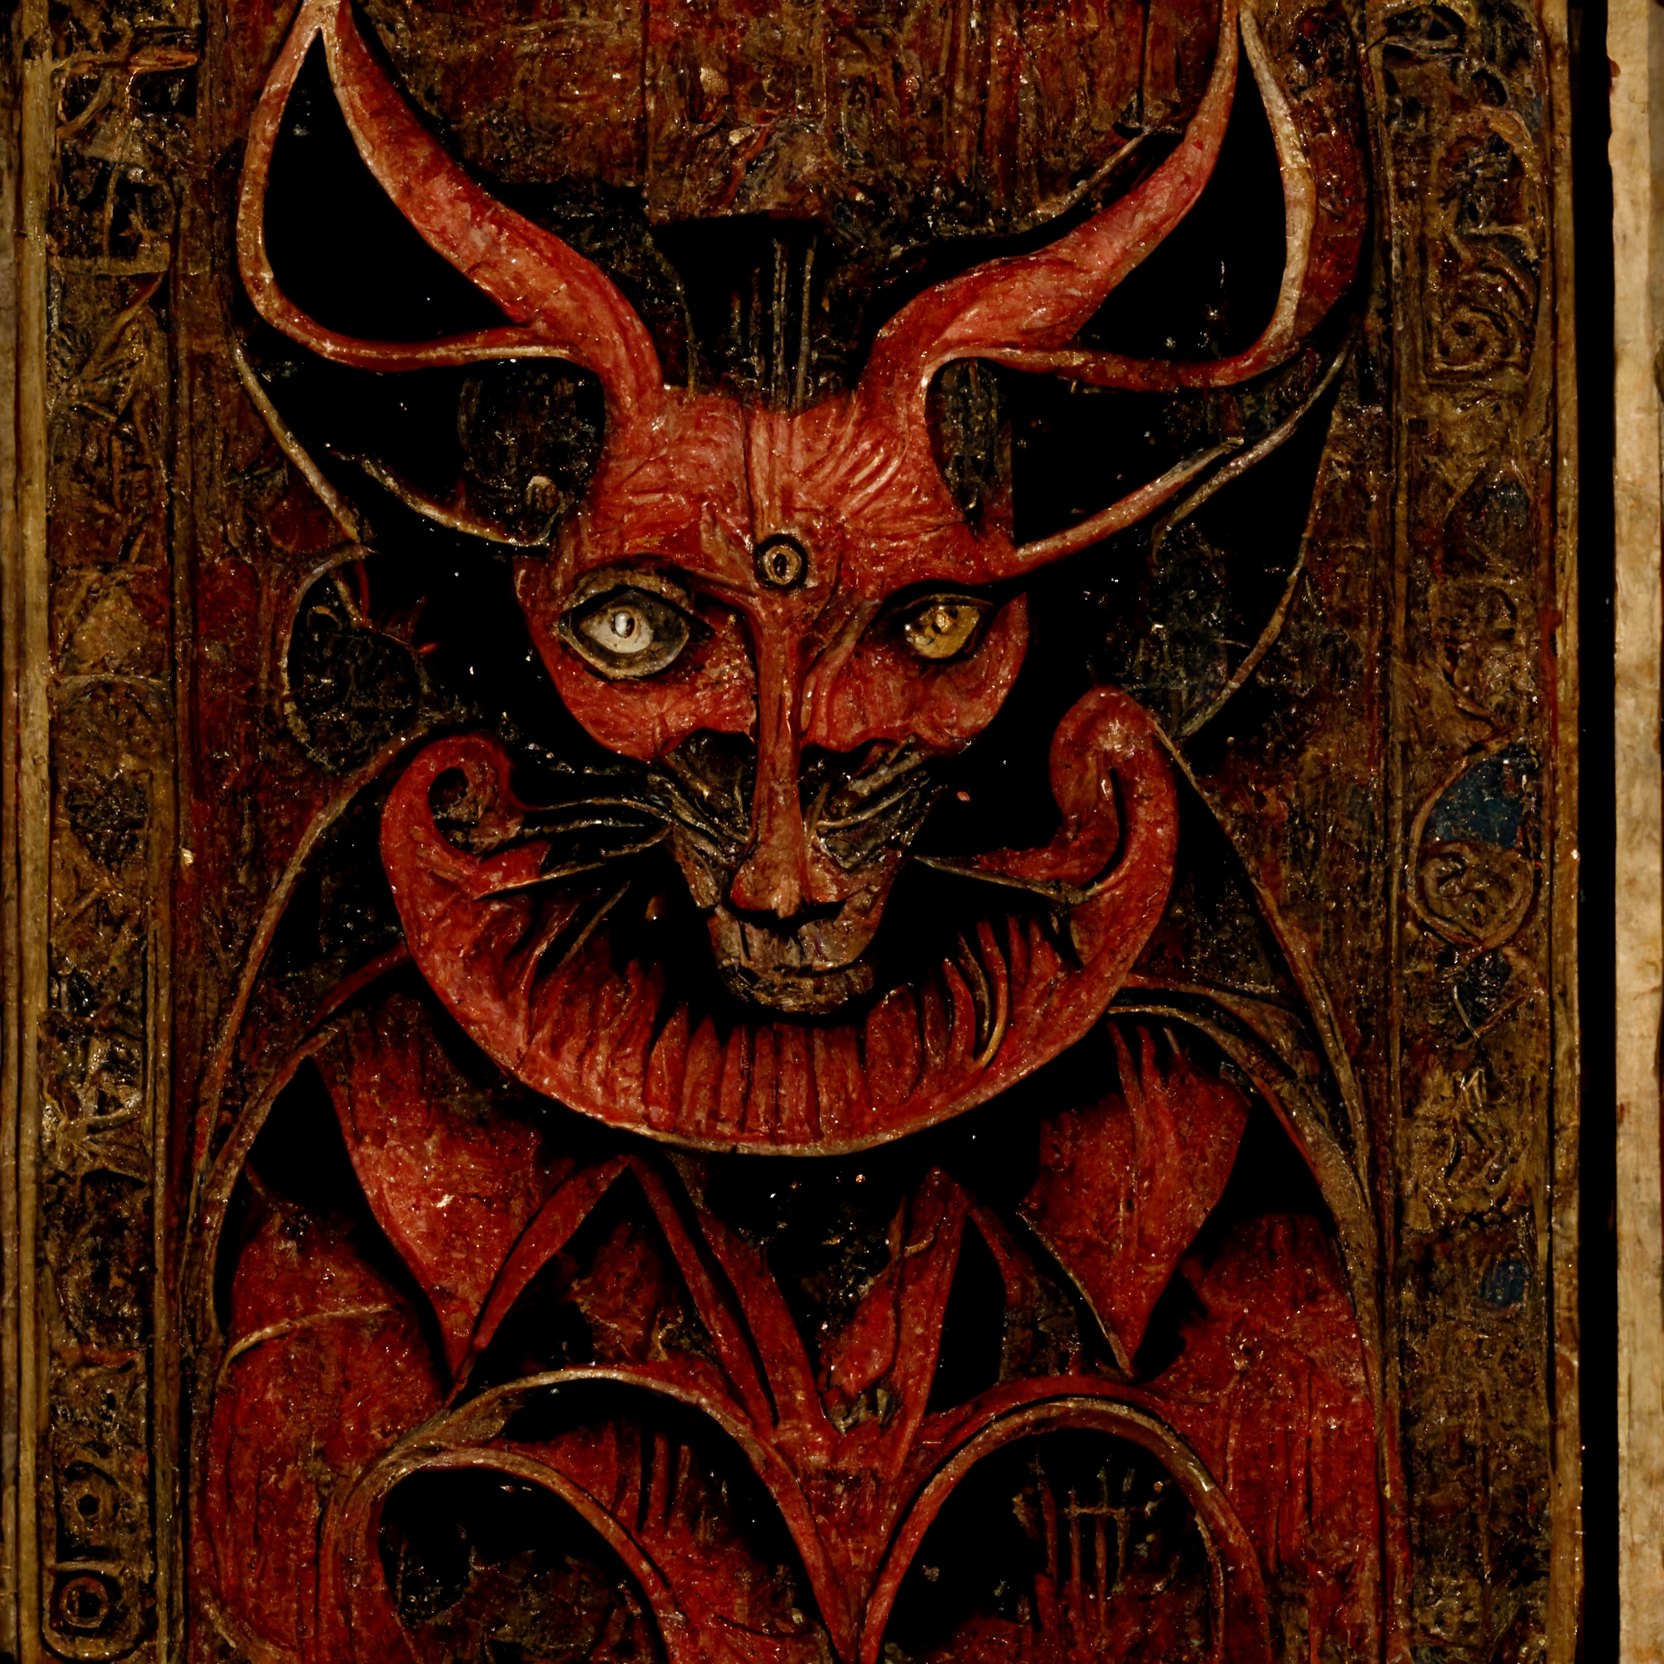 Ulysses_Black_devil_in_the_style_of_a_medieval_manuscript_bce3b1b0-f9c5-4673-9d29-b0a8f7e3e6f5.png